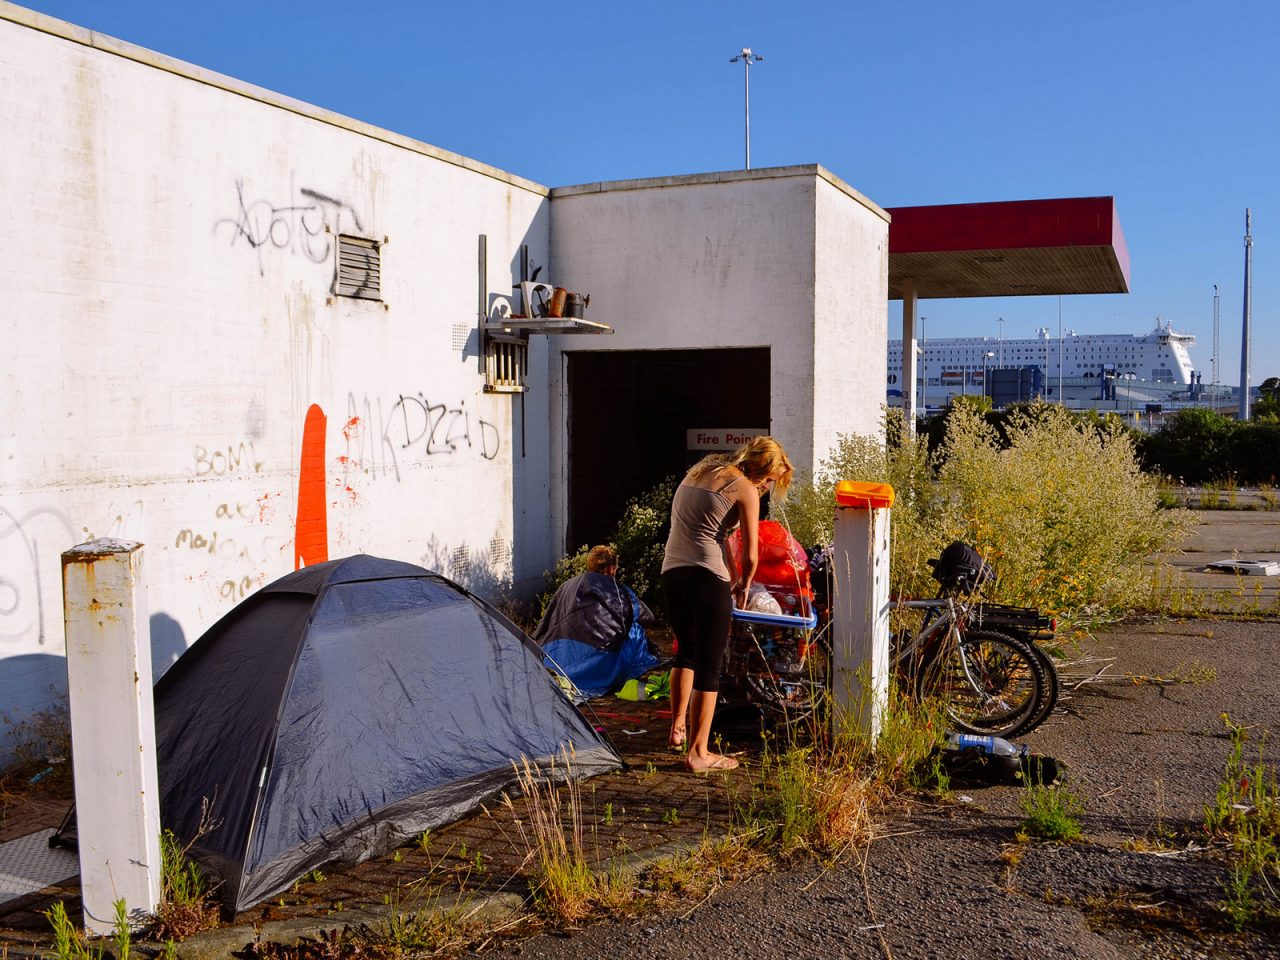 Behind An Abandoned Petrol Station, UK - Free Camping